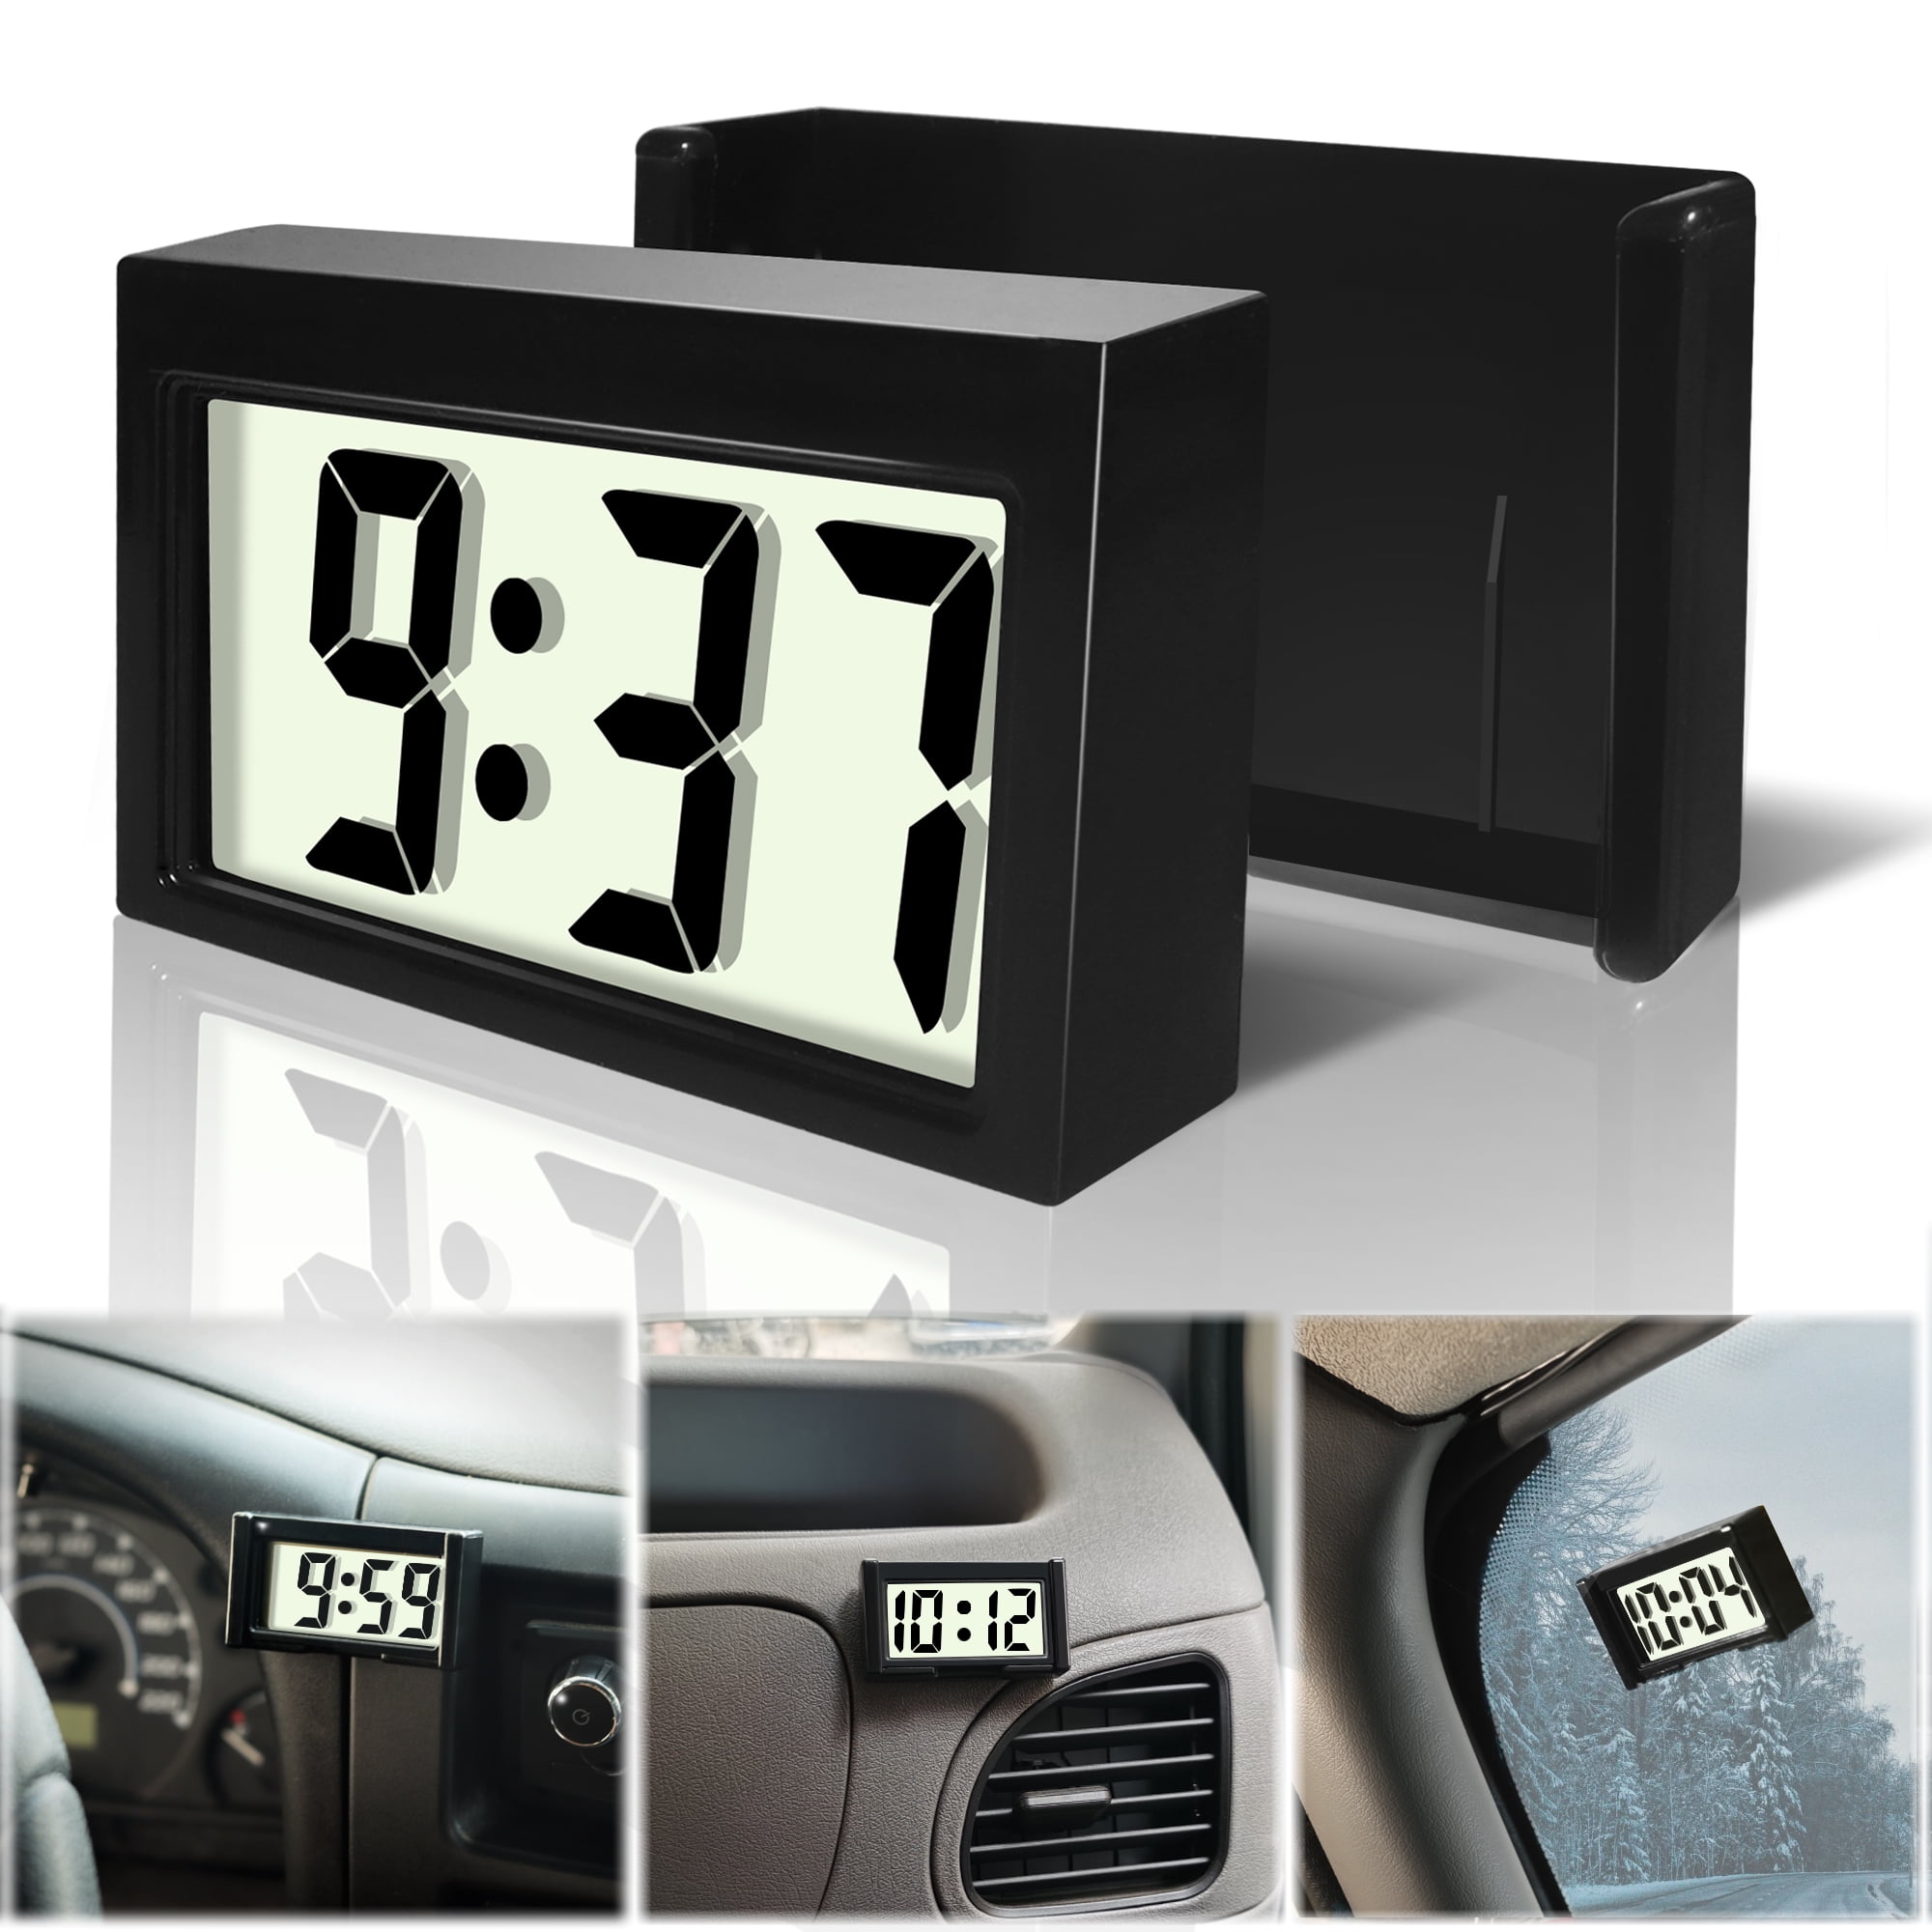 Auto Digital Car Dash LCD Clock Time Date Display Self StickWTUS 